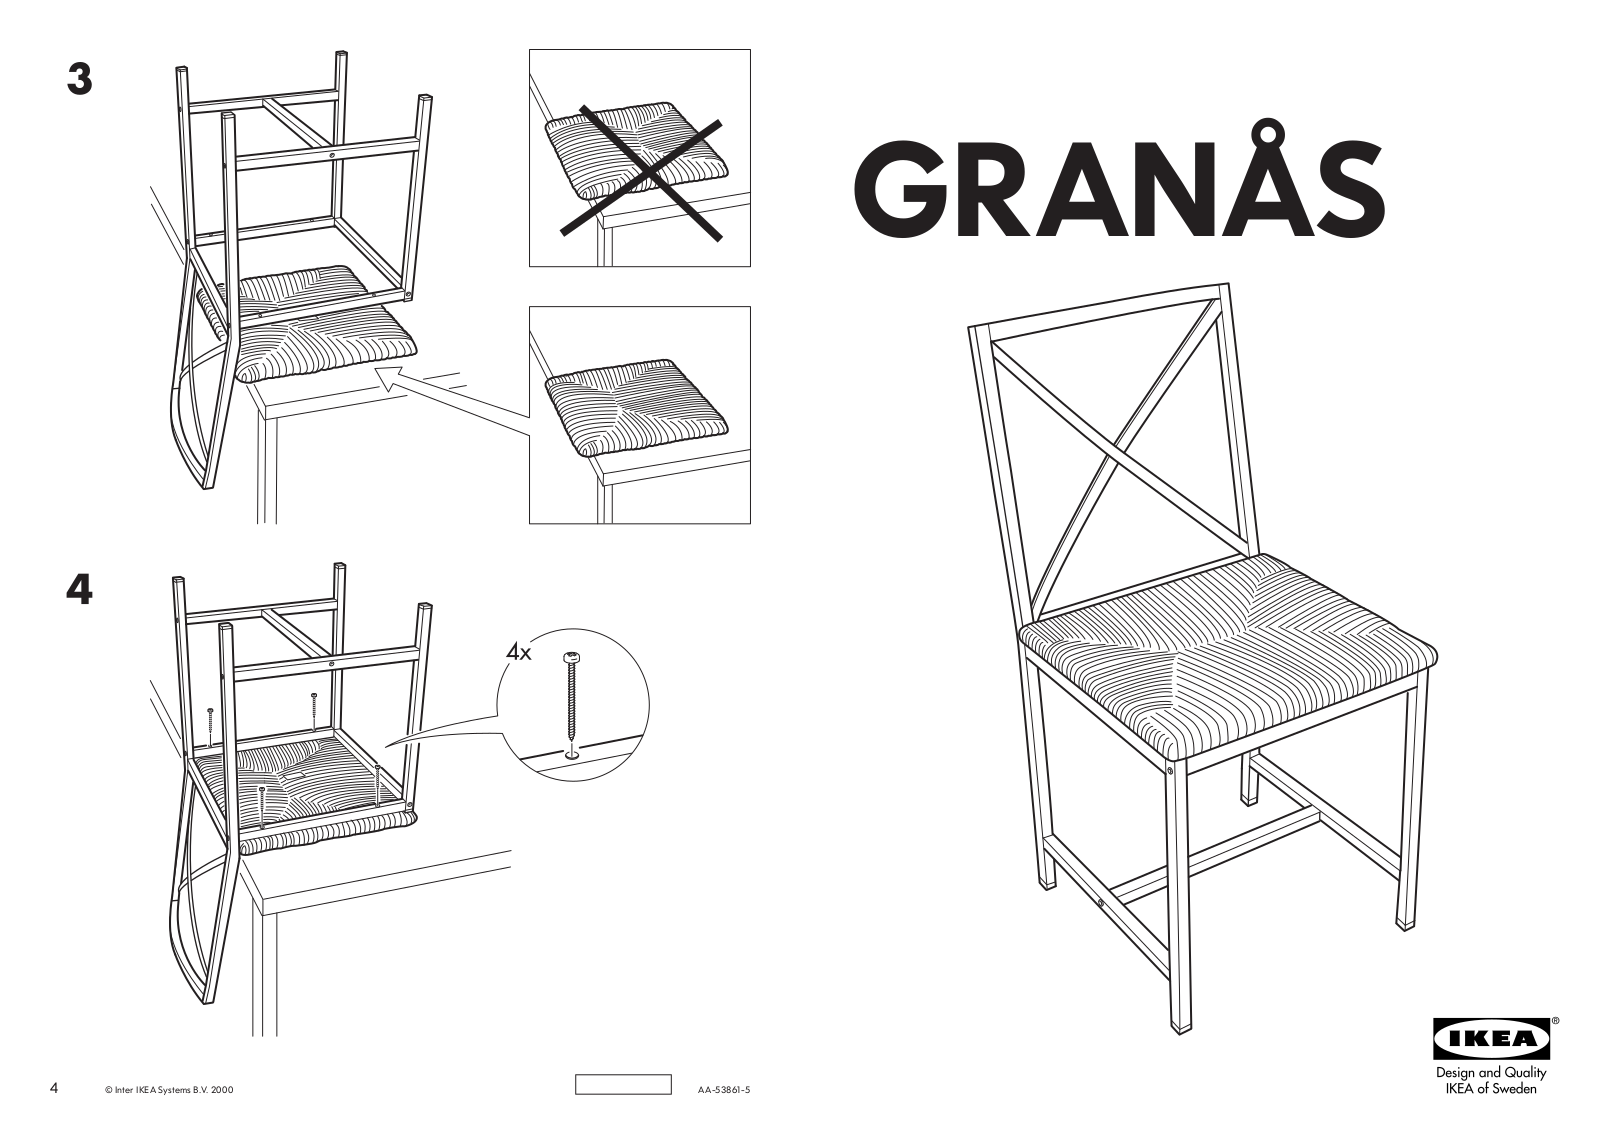 IKEA GRANÅS CHAIR User Manual